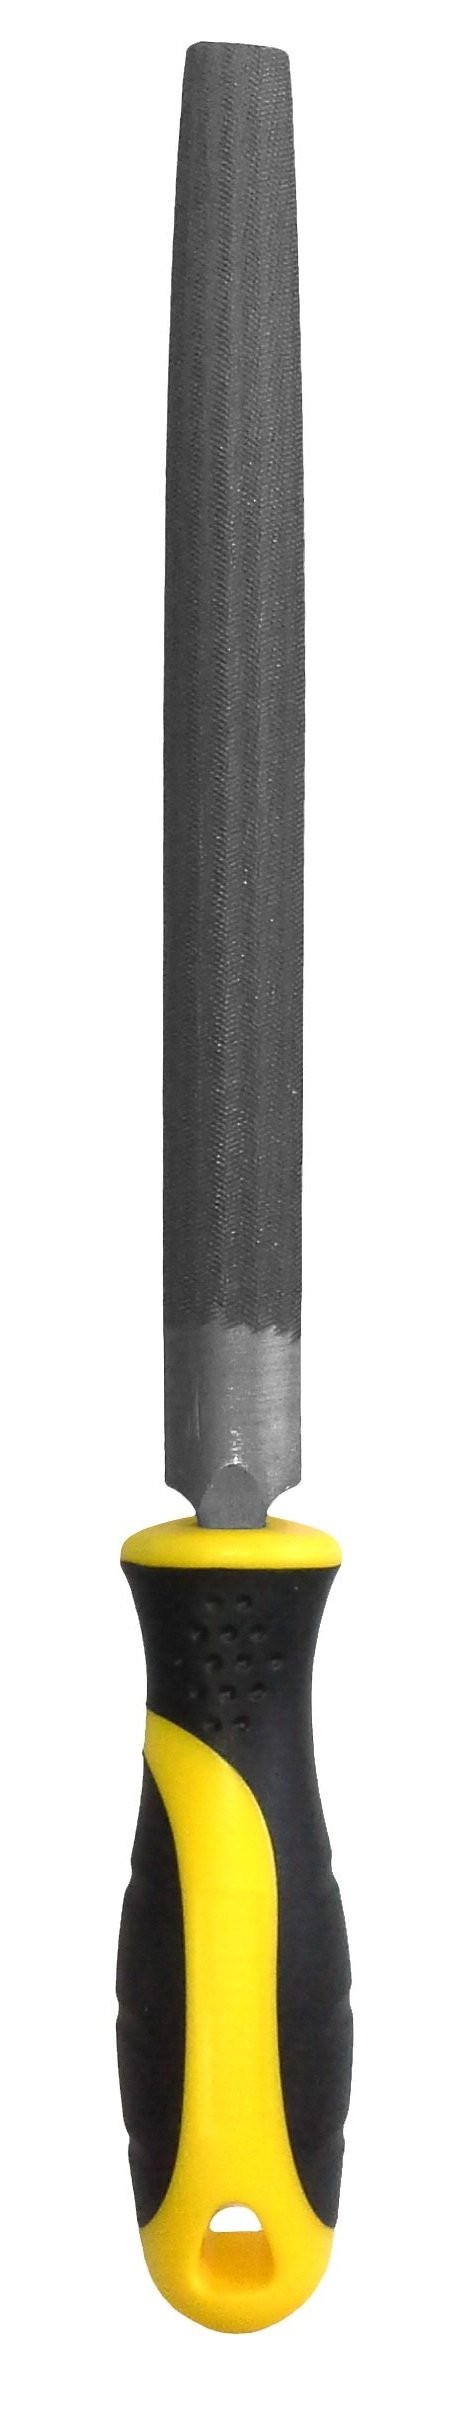 Напильник полукруглый с рукояткой 200 мм/BERGER Аналог арт. 09027